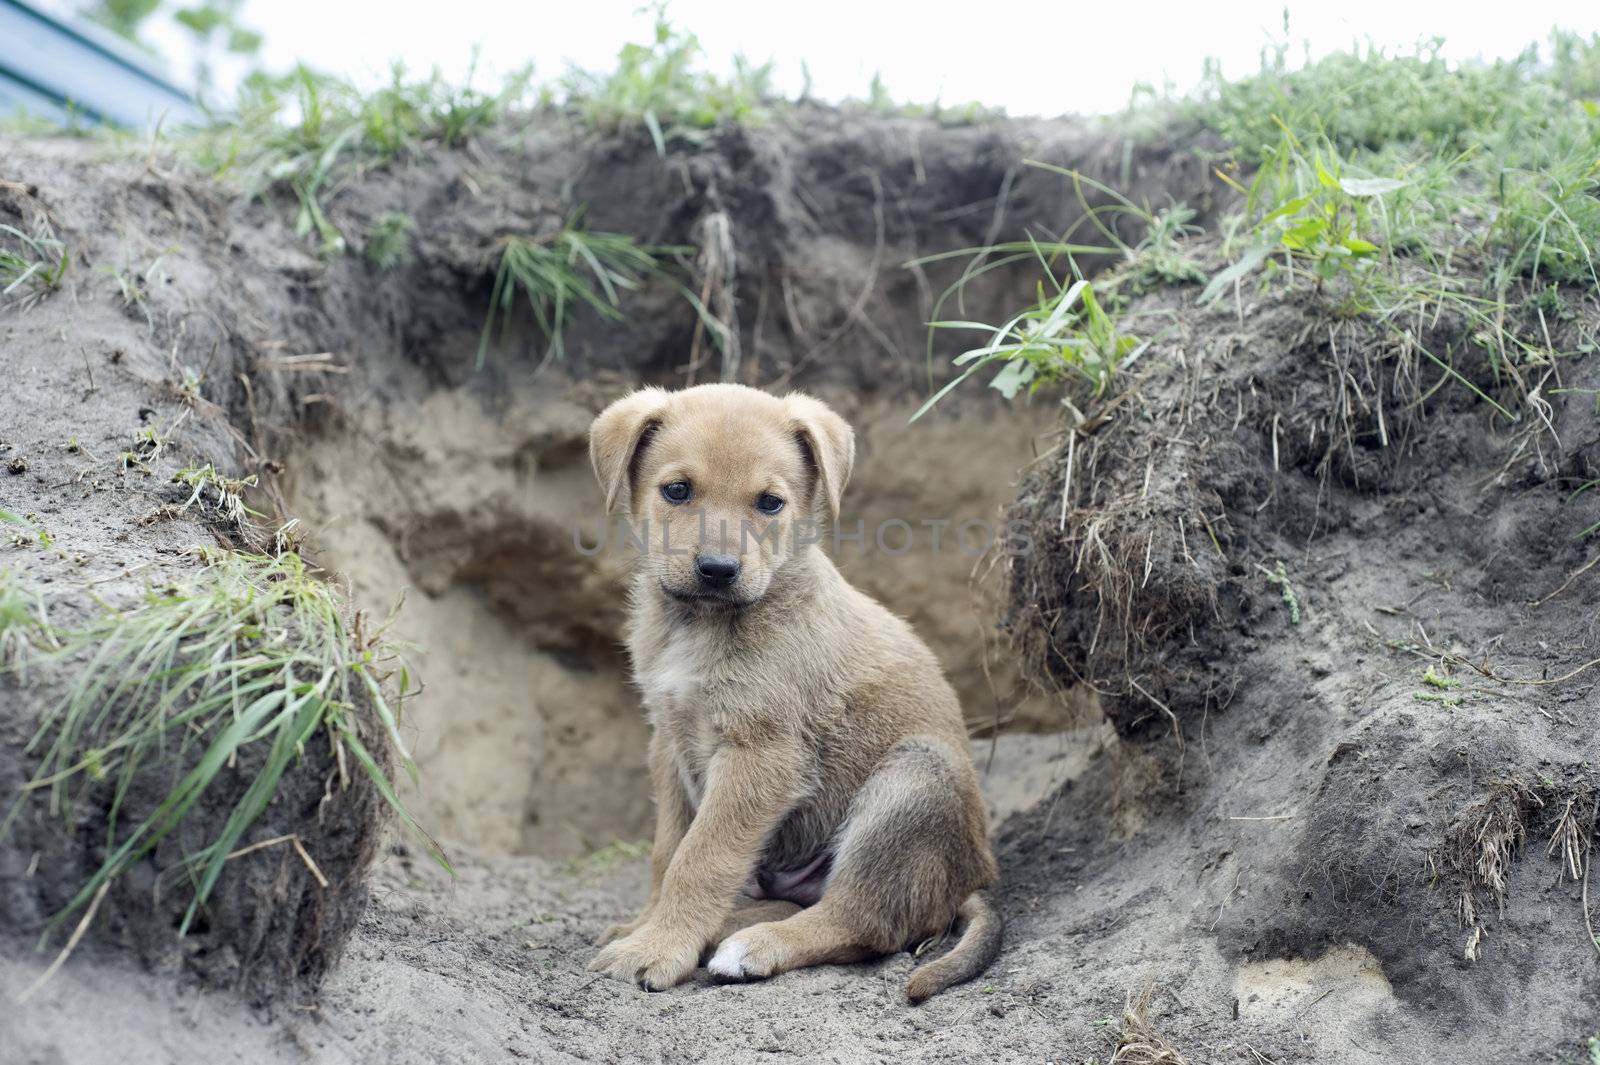  Homeless puppy near the hole